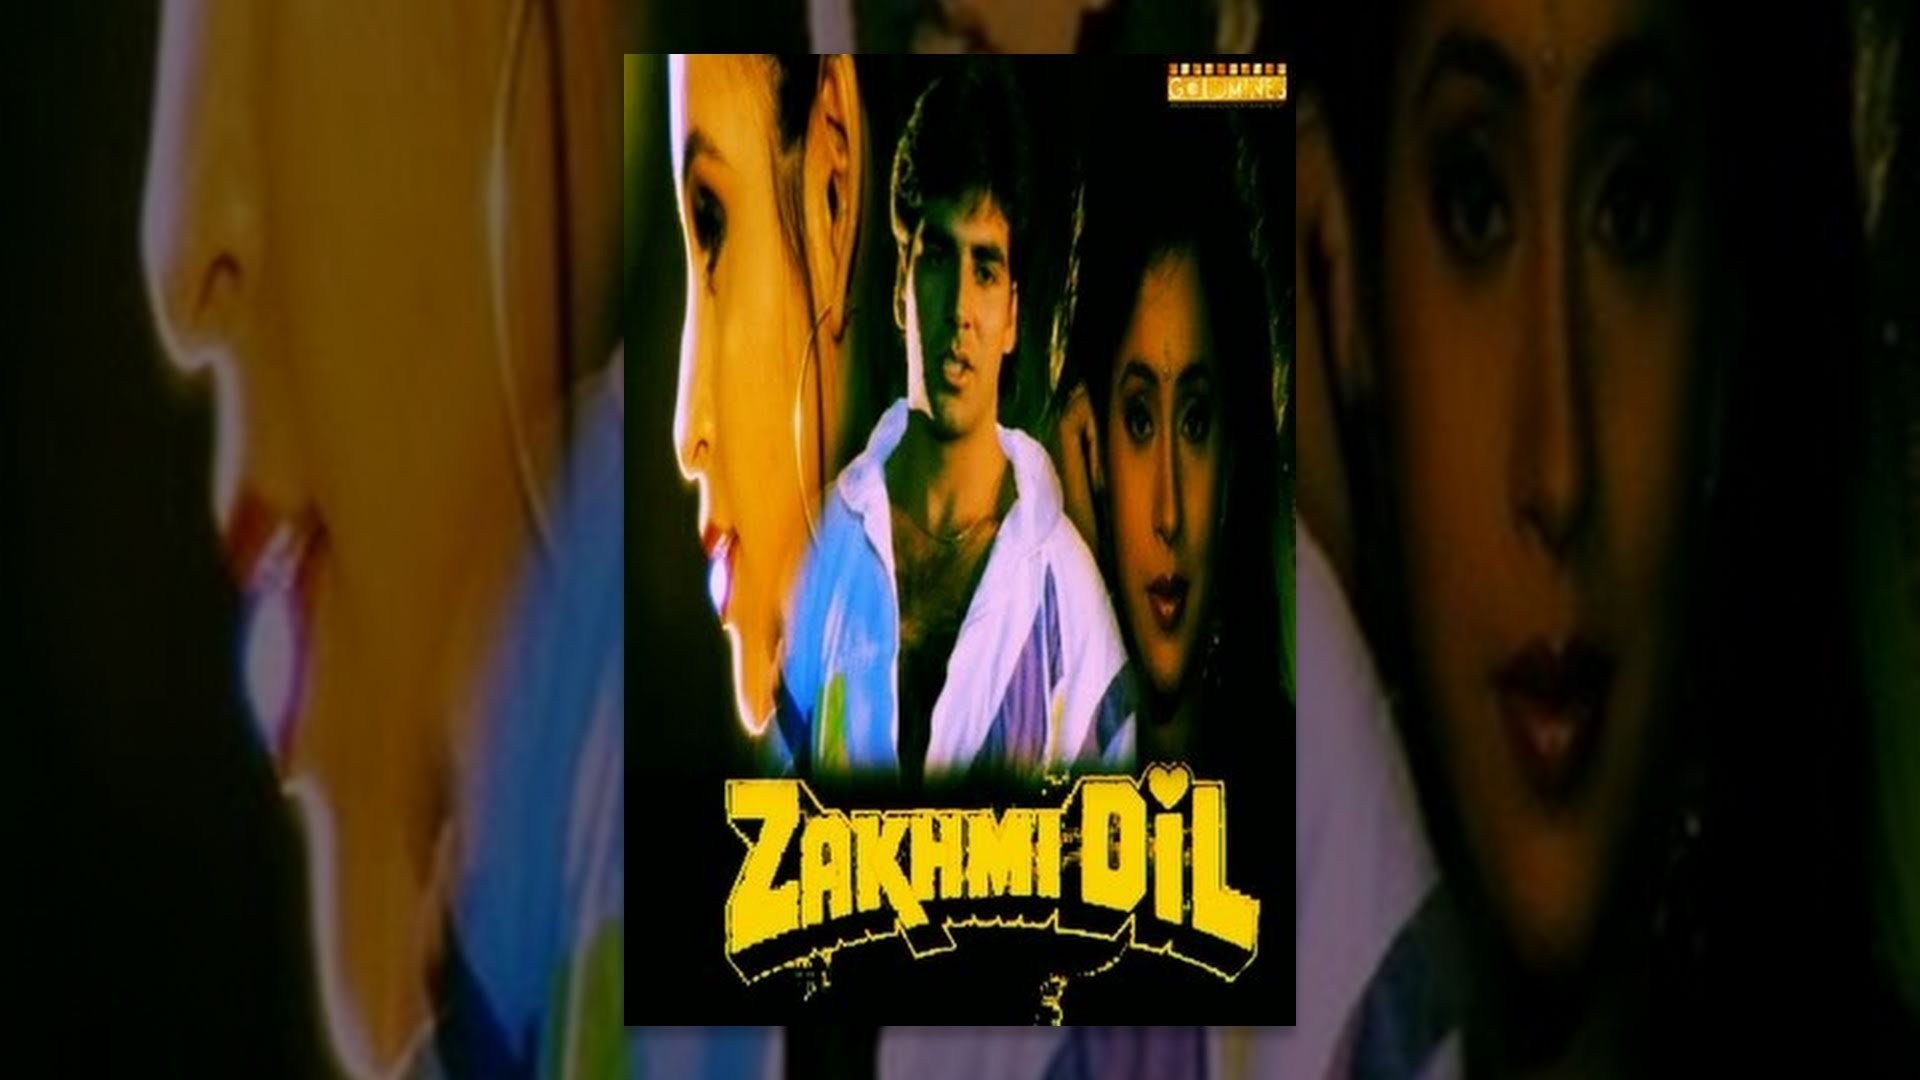 Zakhmi Dil Movie Poster